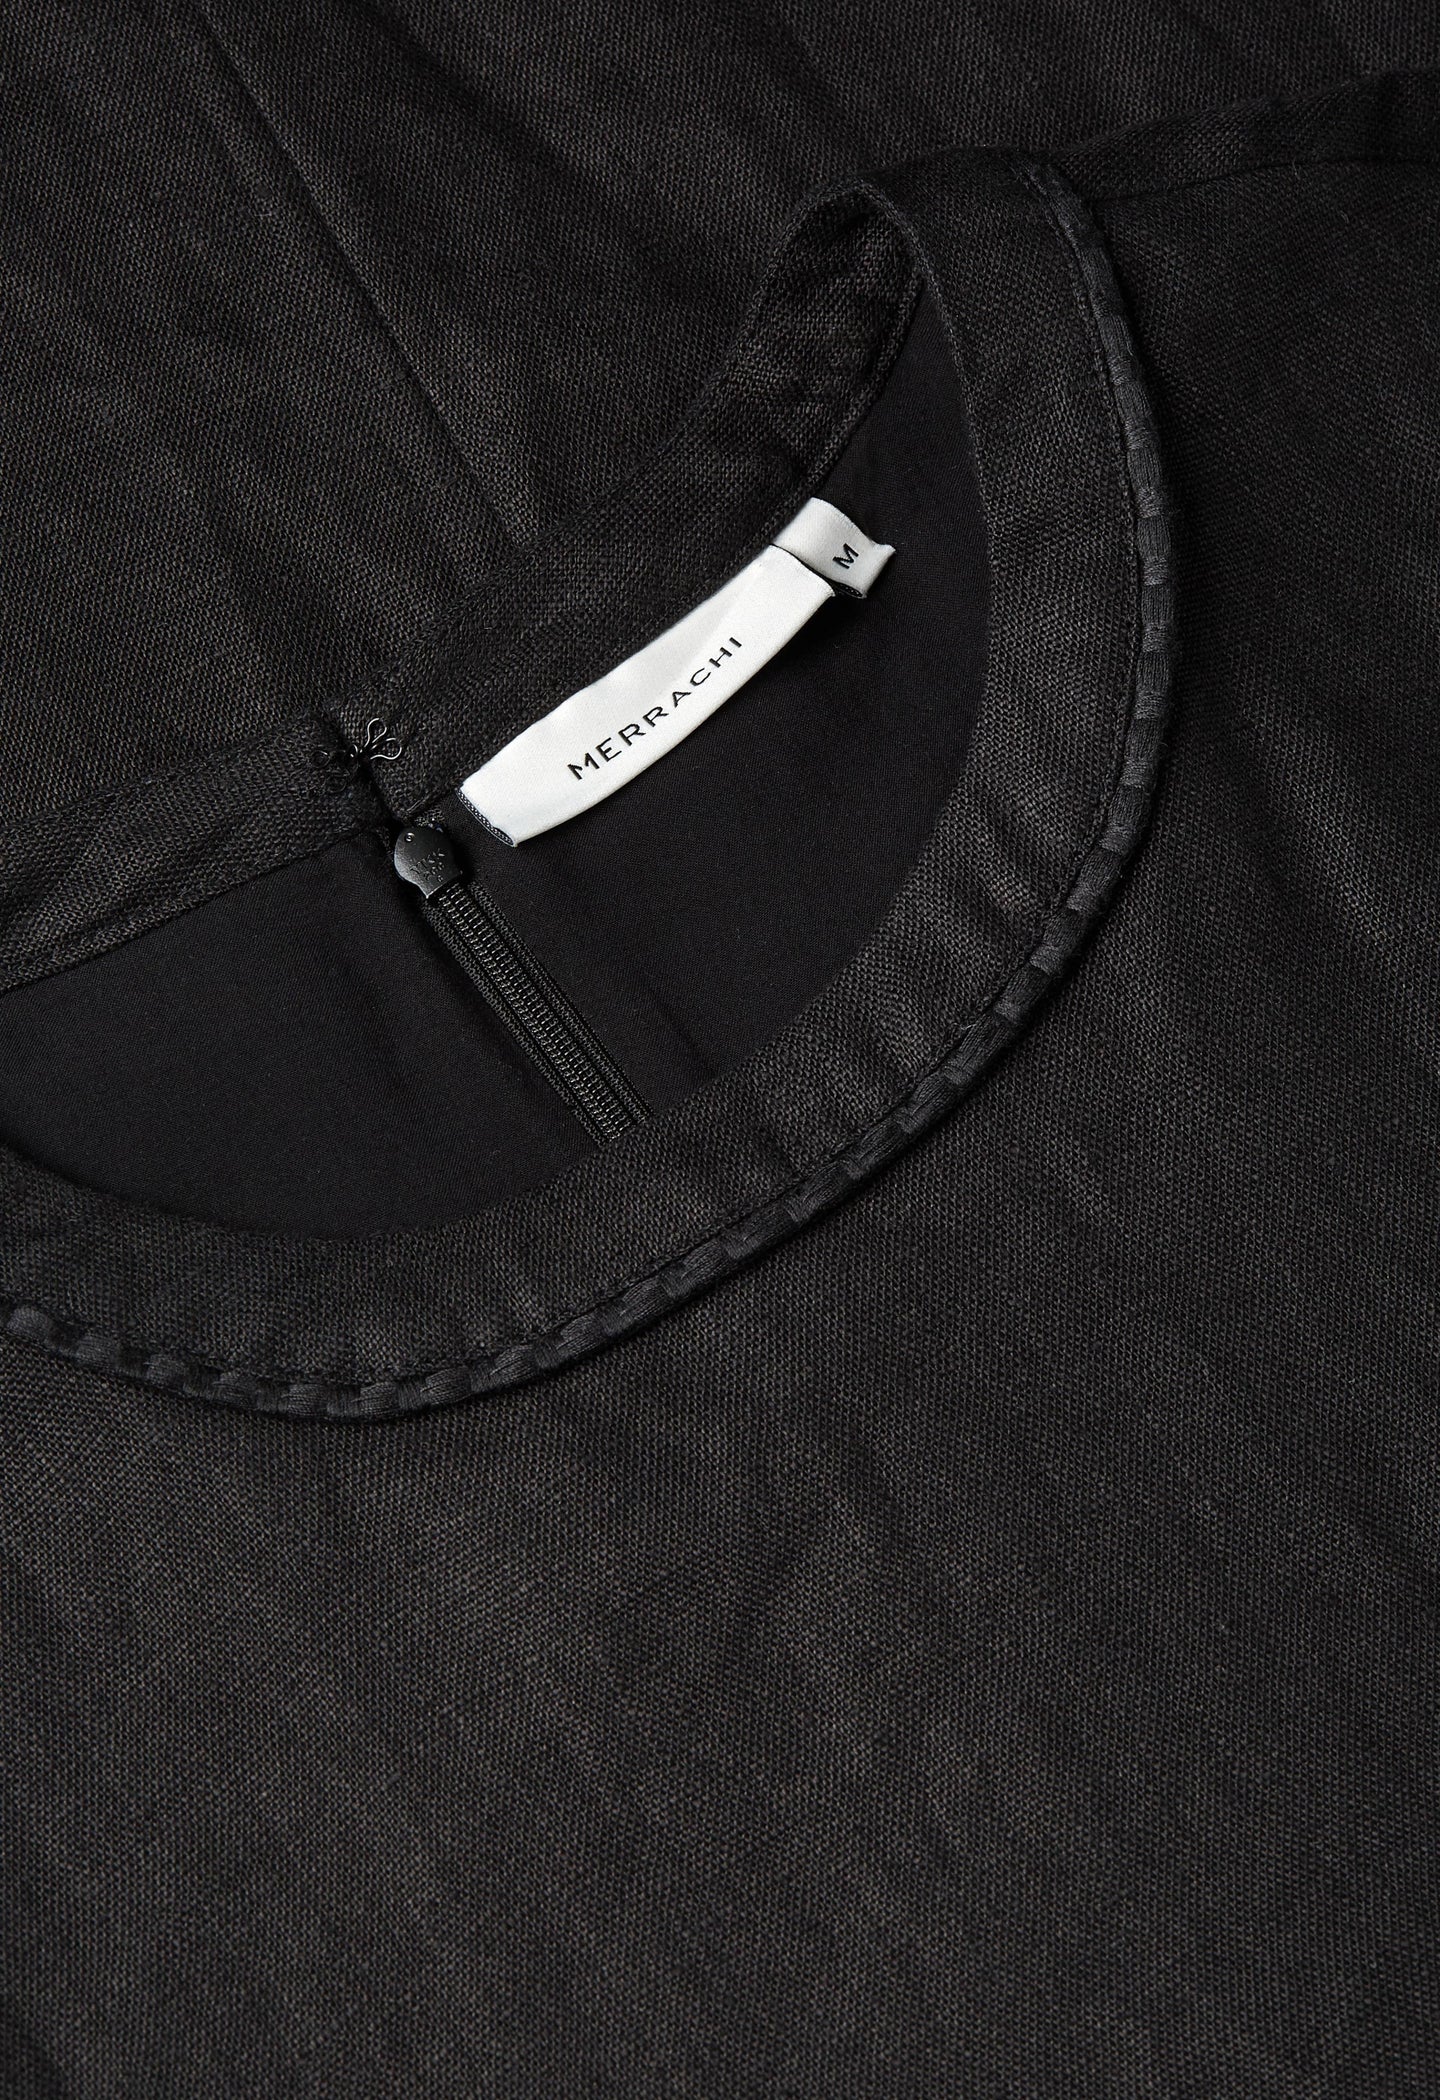 Plain Linen Dress | Black